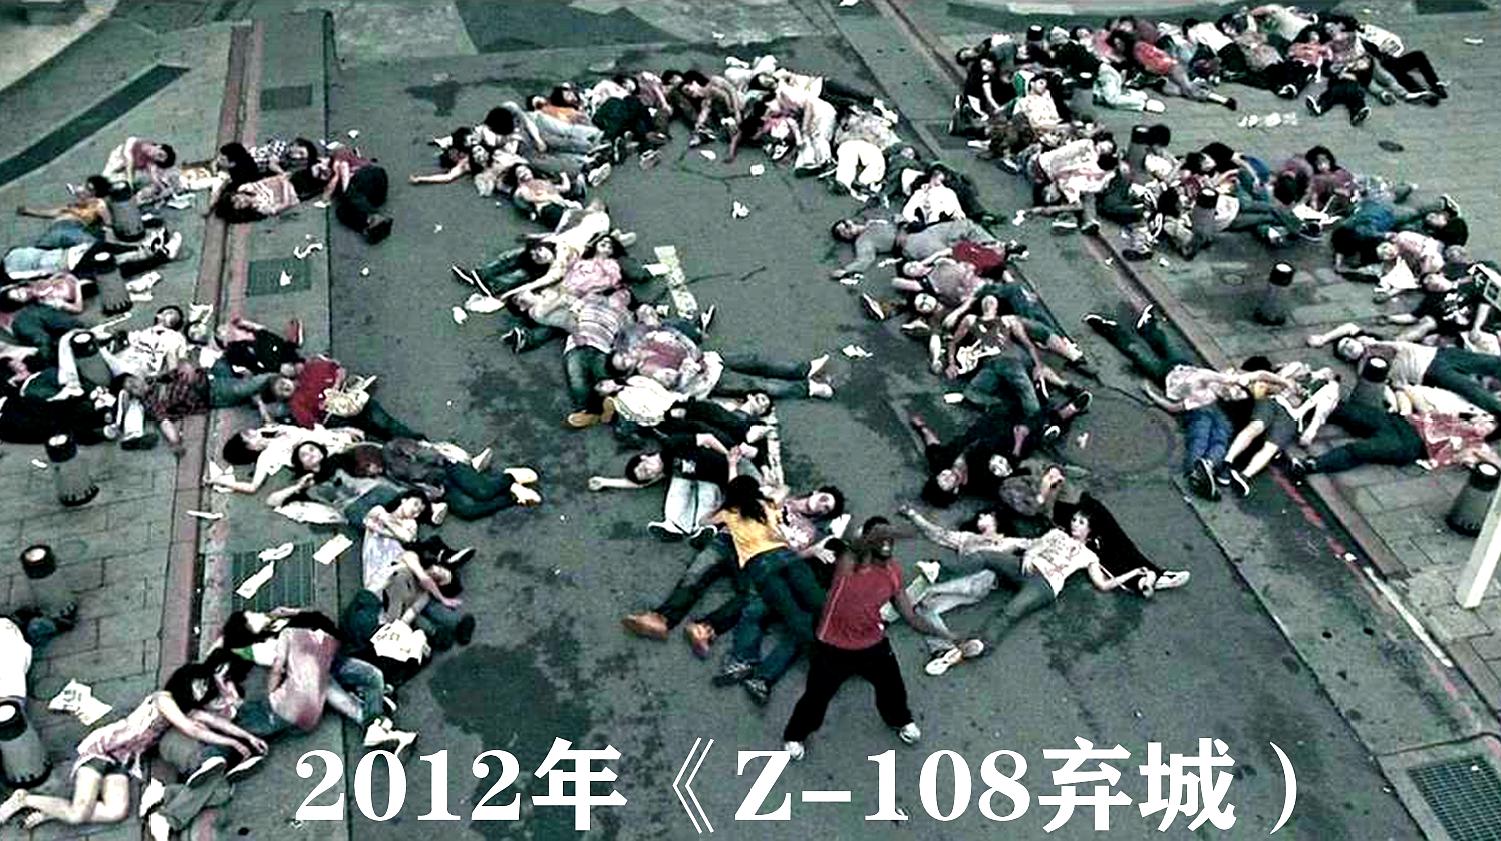 【Z-108棄城】風靡比利時奇幻影展 國際媒體譽為台灣版昆丁塔倫提諾B級惡搞電影 - WoWoNews